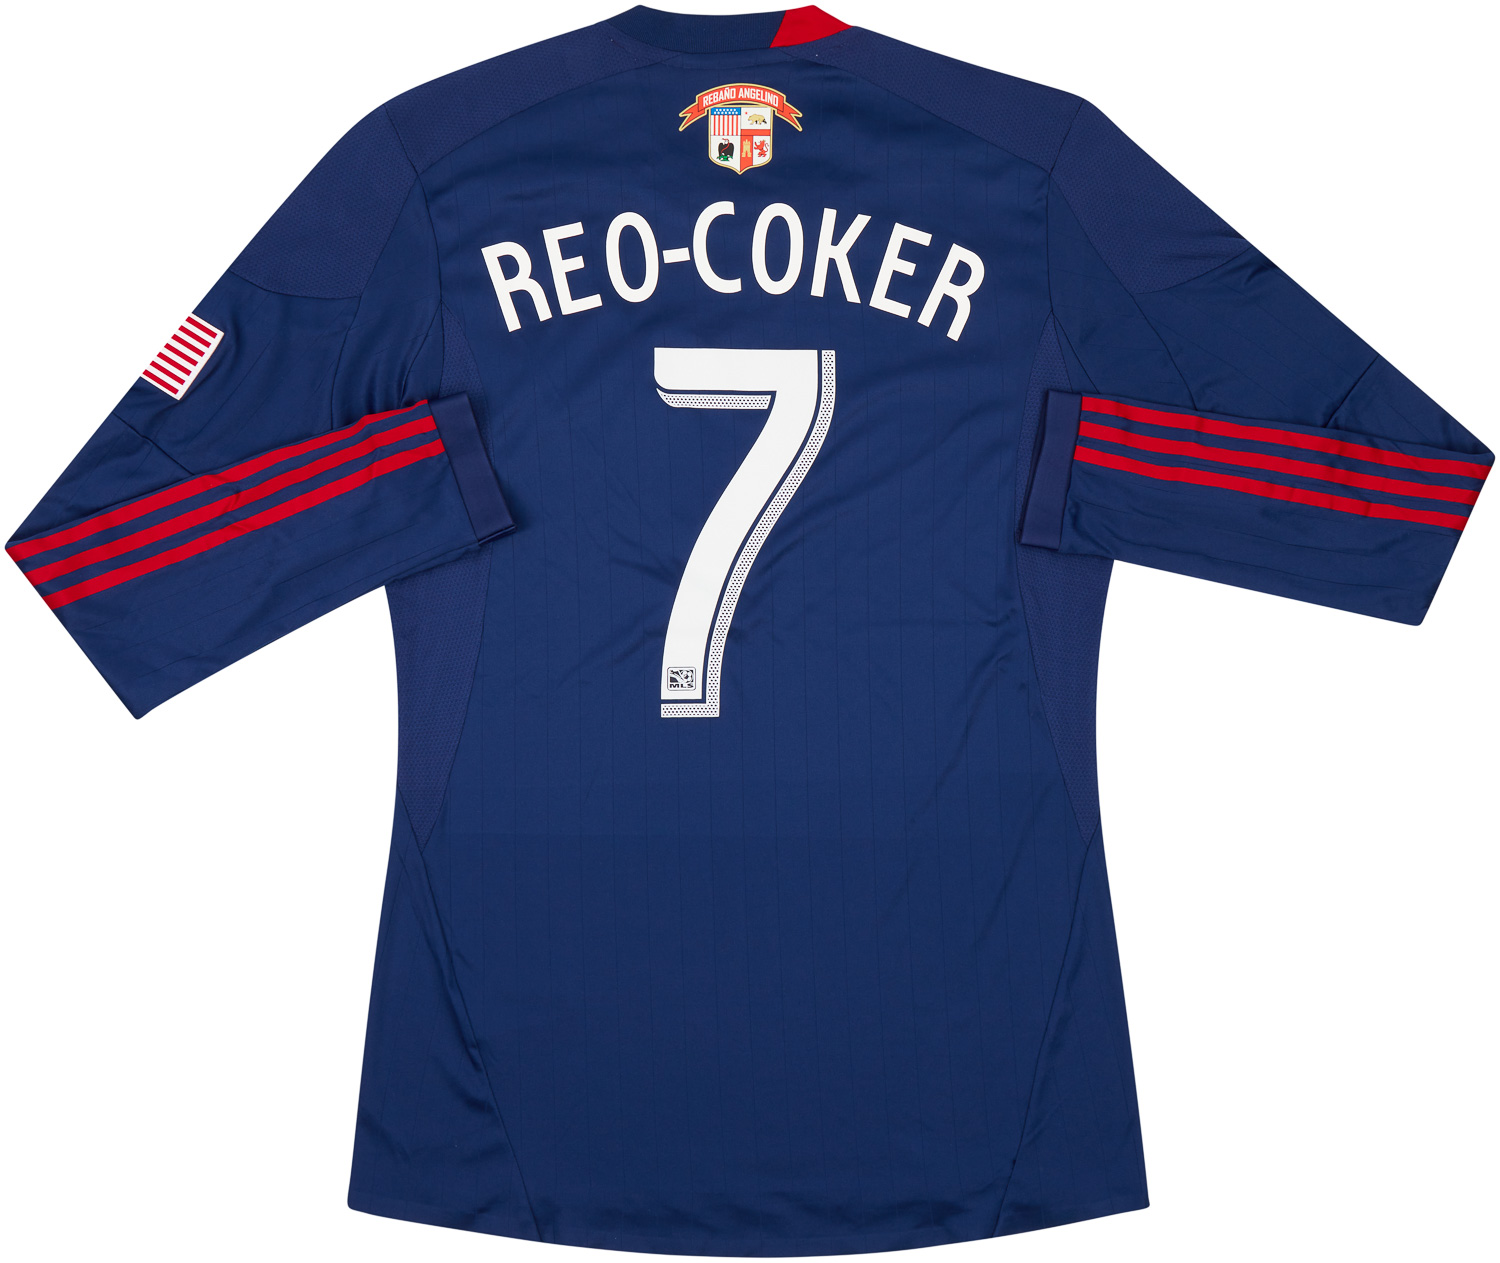 2014 Chivas USA Match Issue Home Shirt Reo-Coker #7